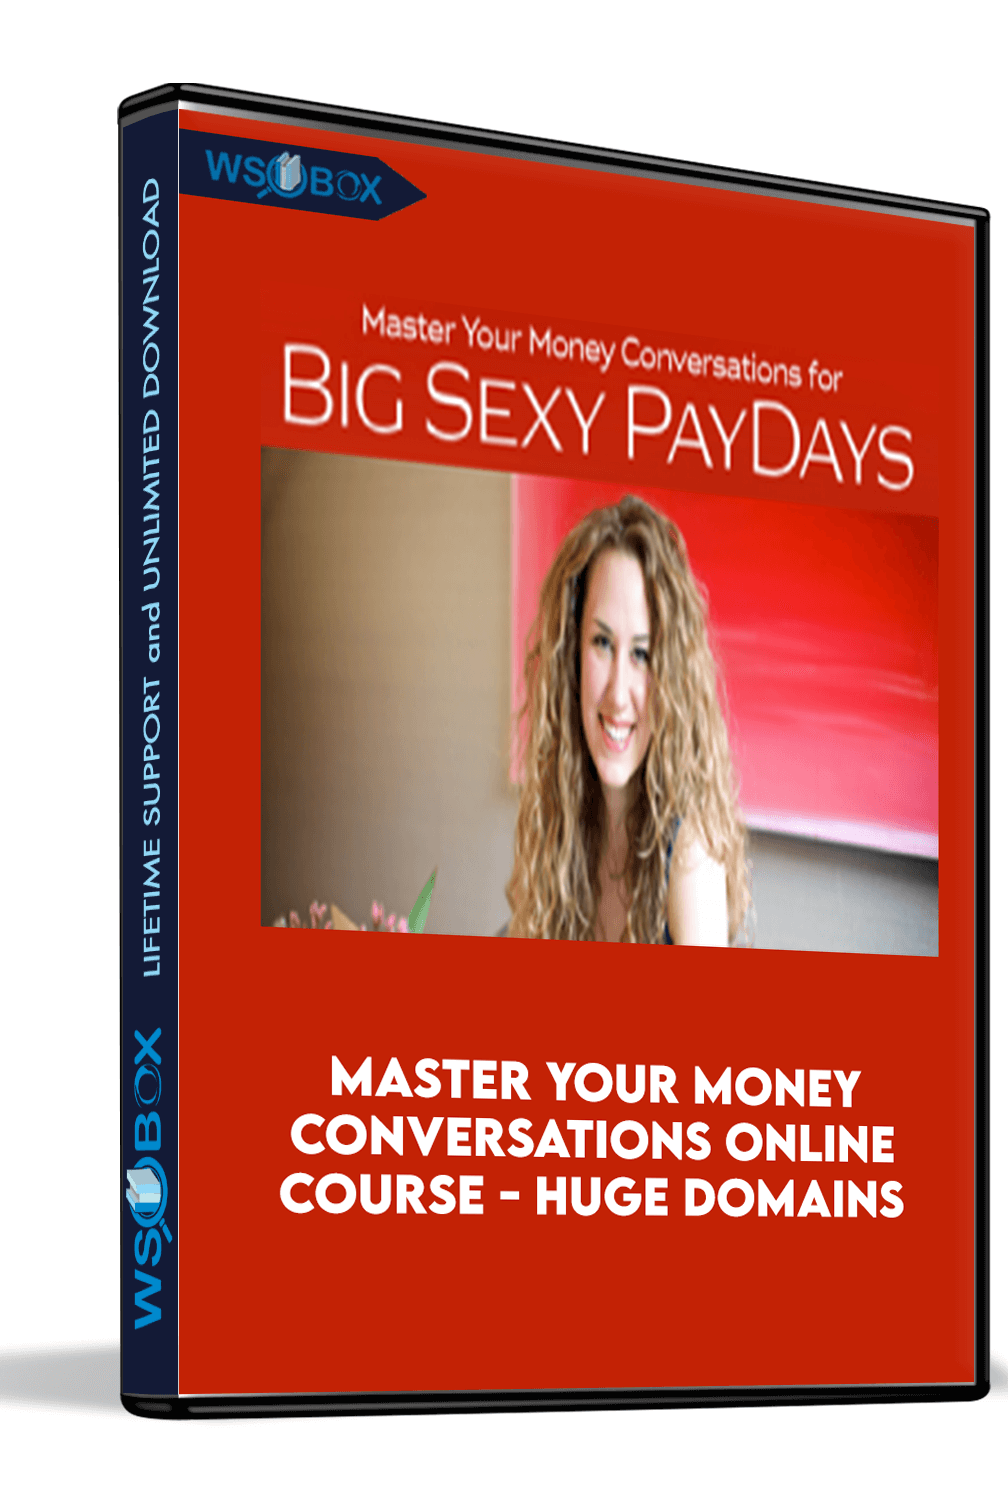 master-your-money-conversations-online-course-huge-domains